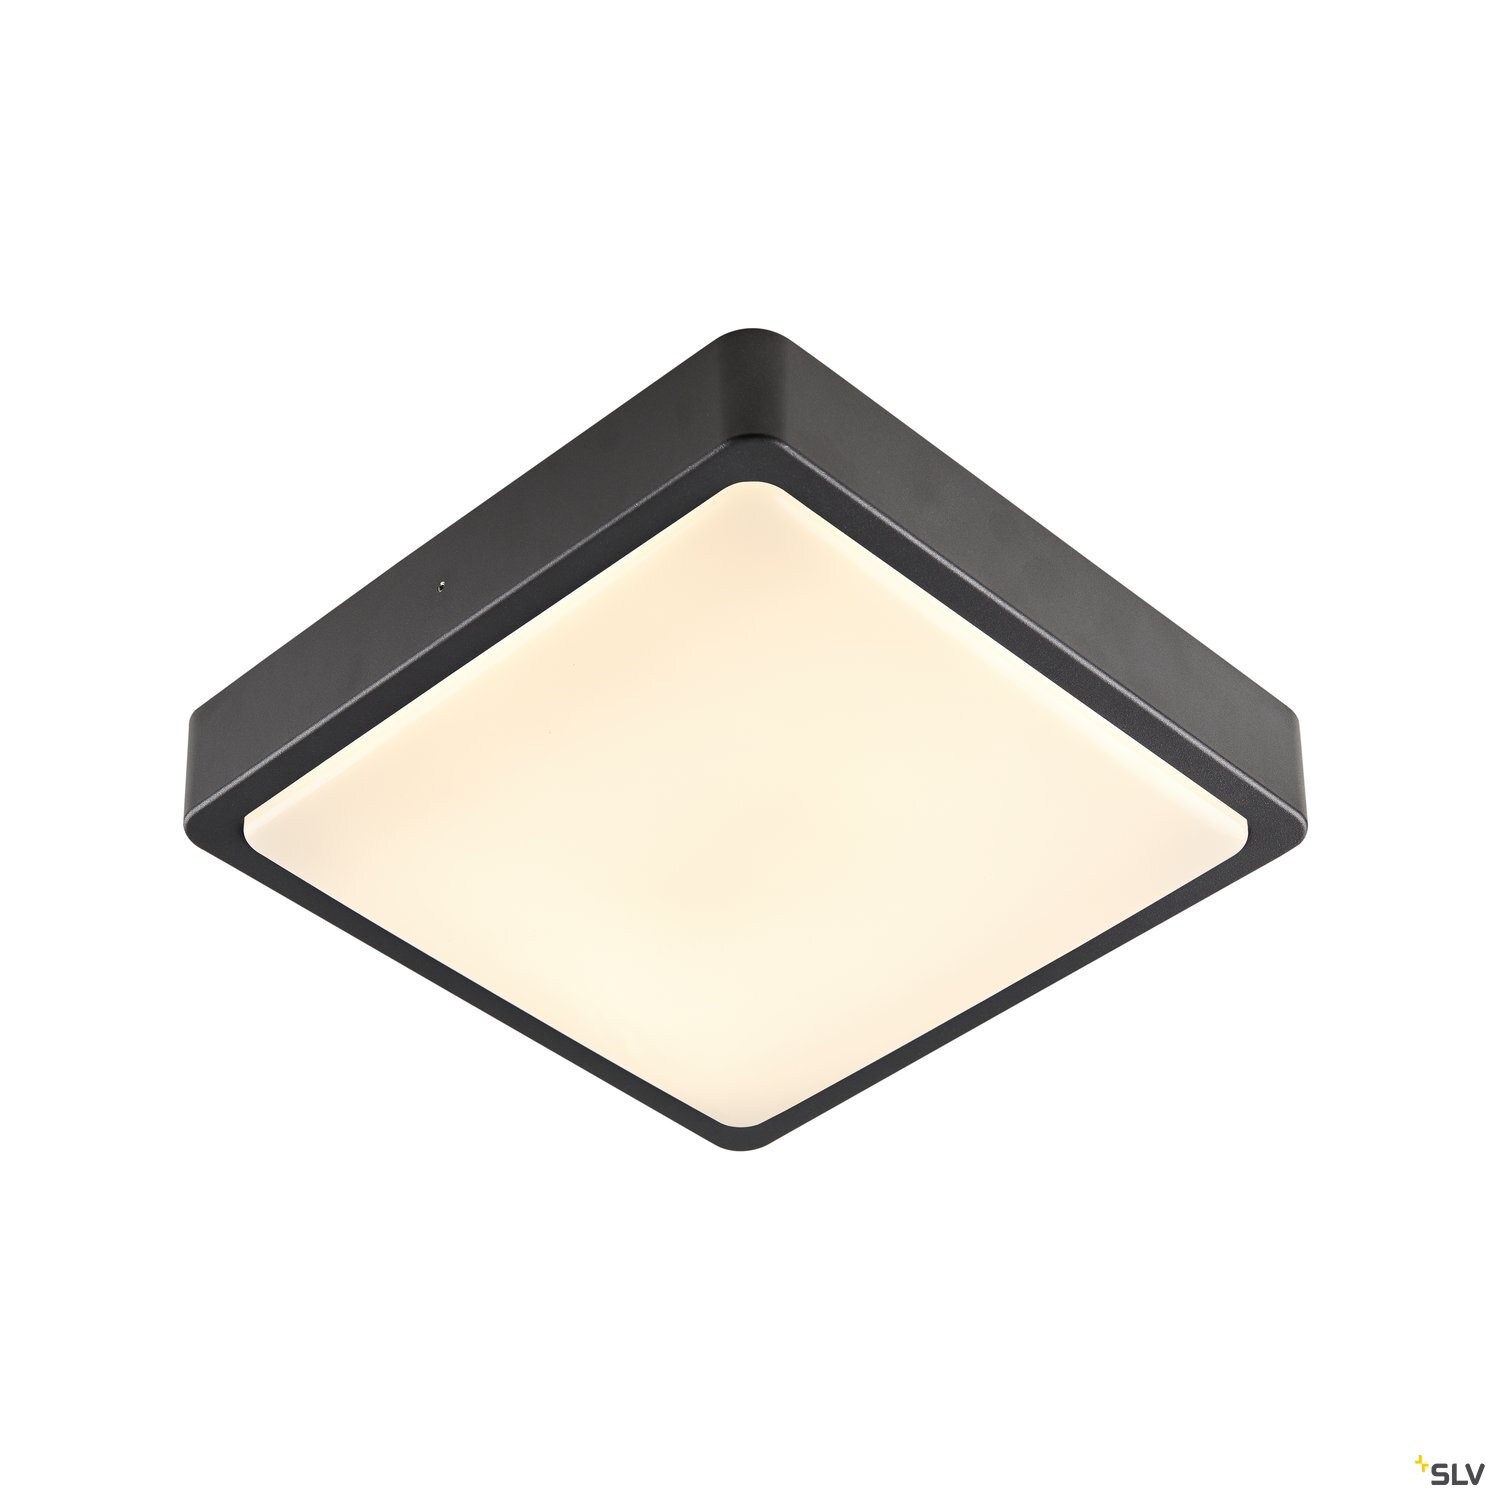 SLV LED Ceiling Light AINOS SQUARE, 3000/4000K, square, anthracite, IP65 1300lm